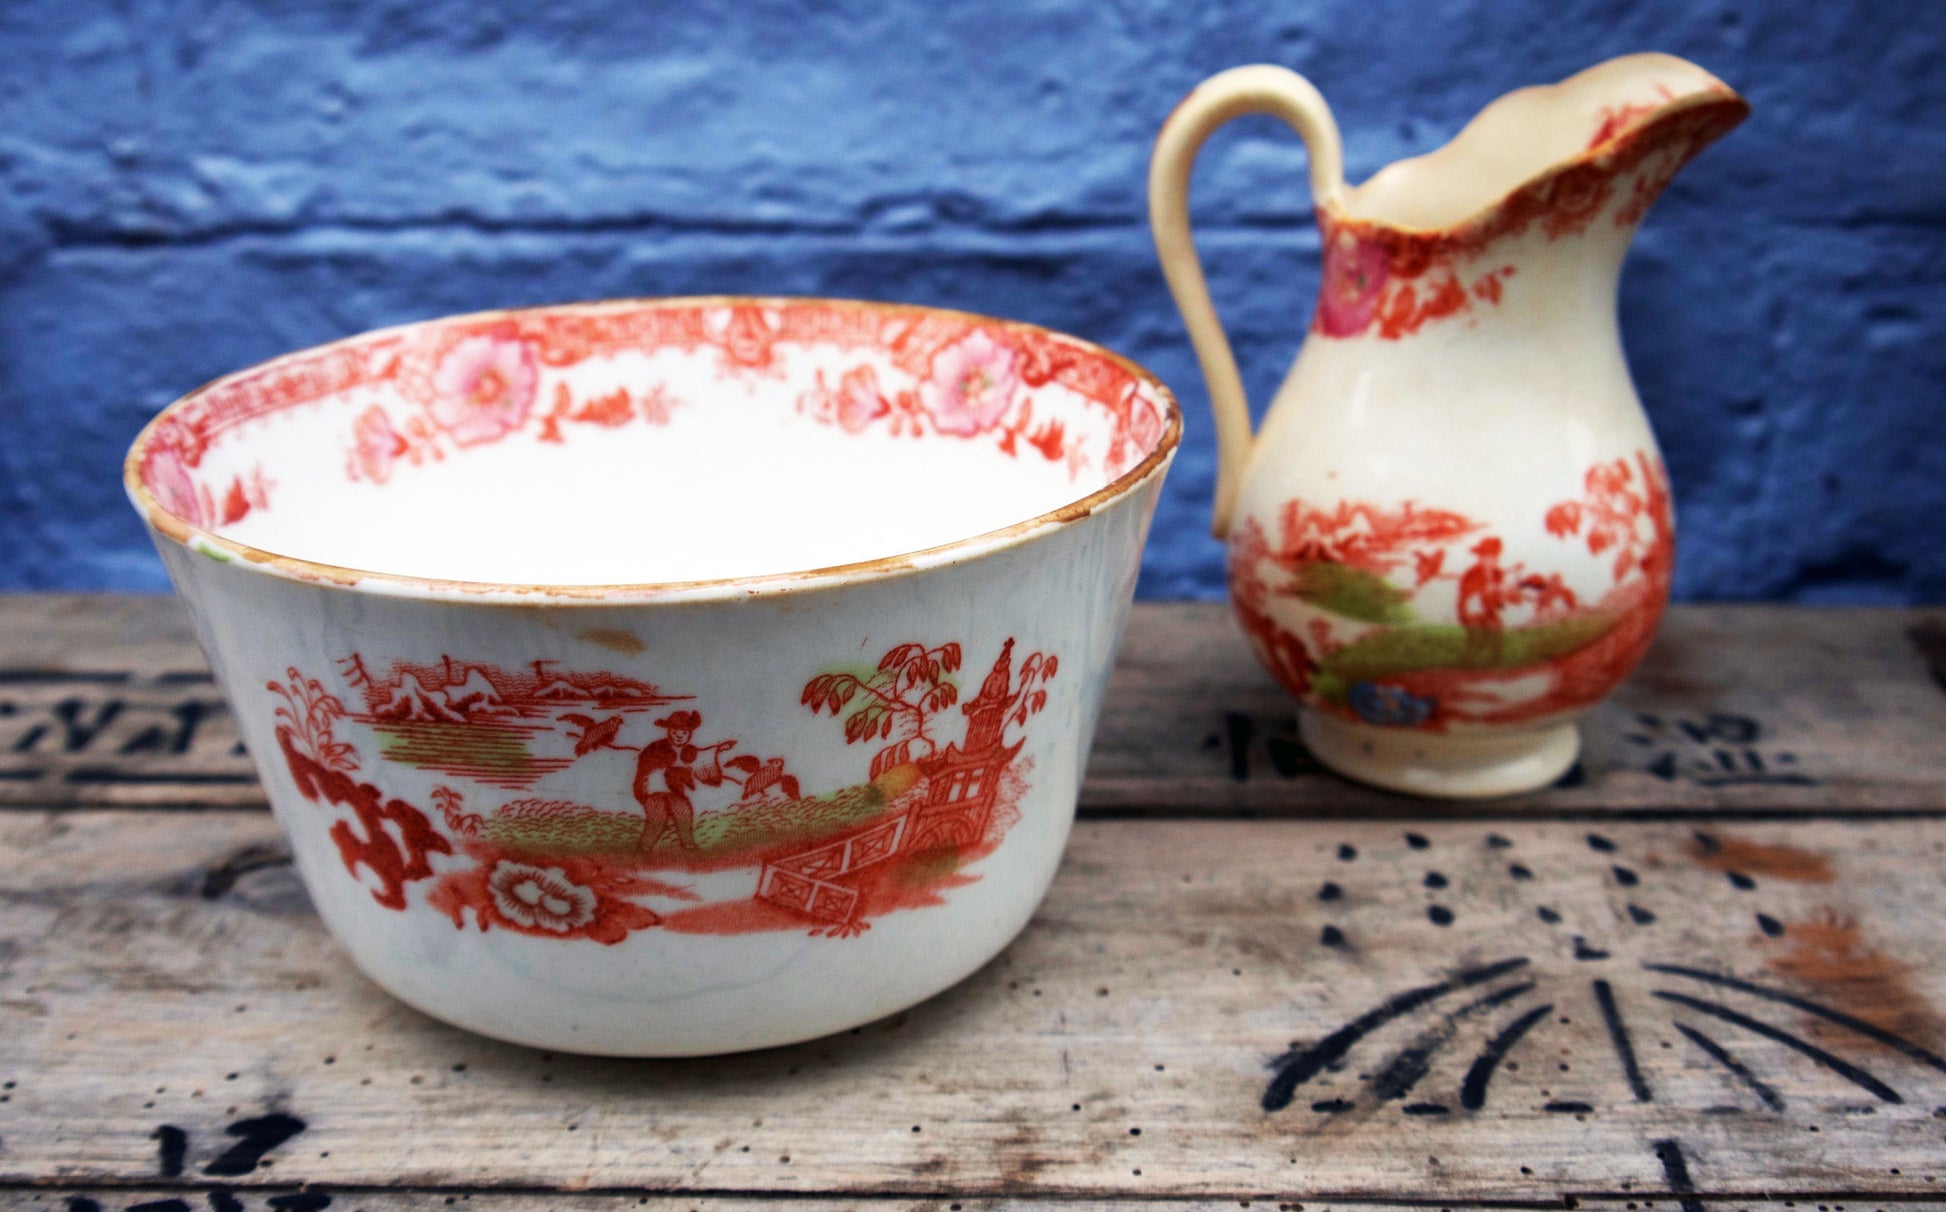 Stunning vintage staffordshire bone china tea set with chinese design 1920's